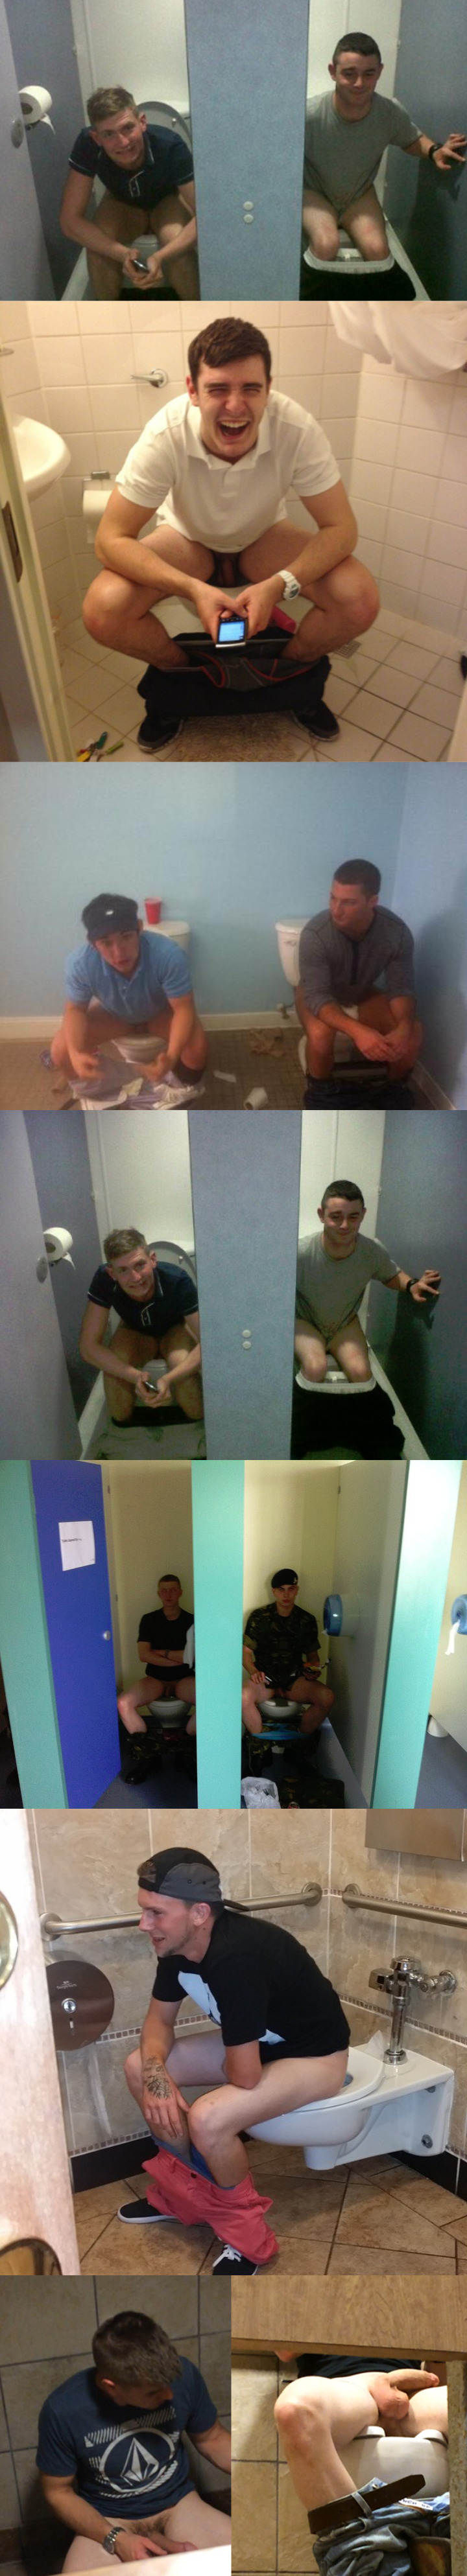 guys toilet hidden cameras